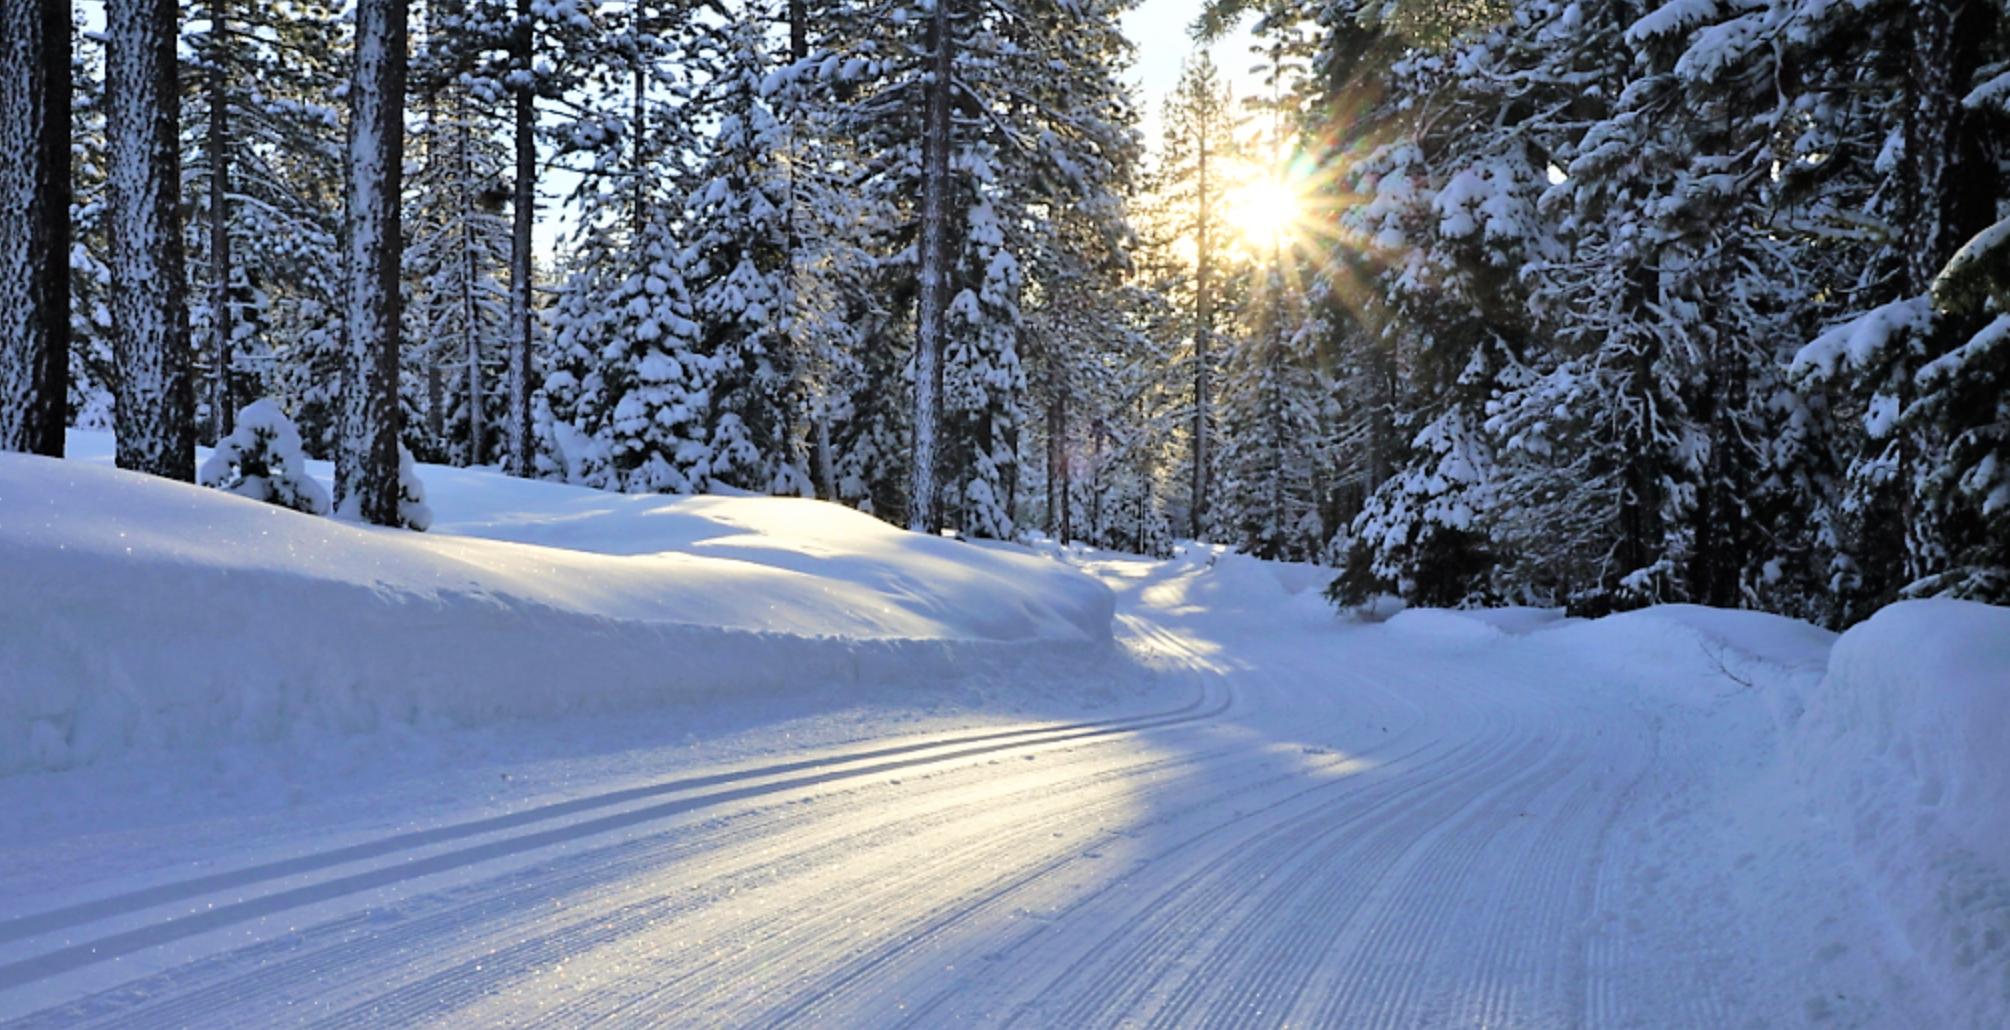 Sun Lit Trees and Perfect Ski Tracks